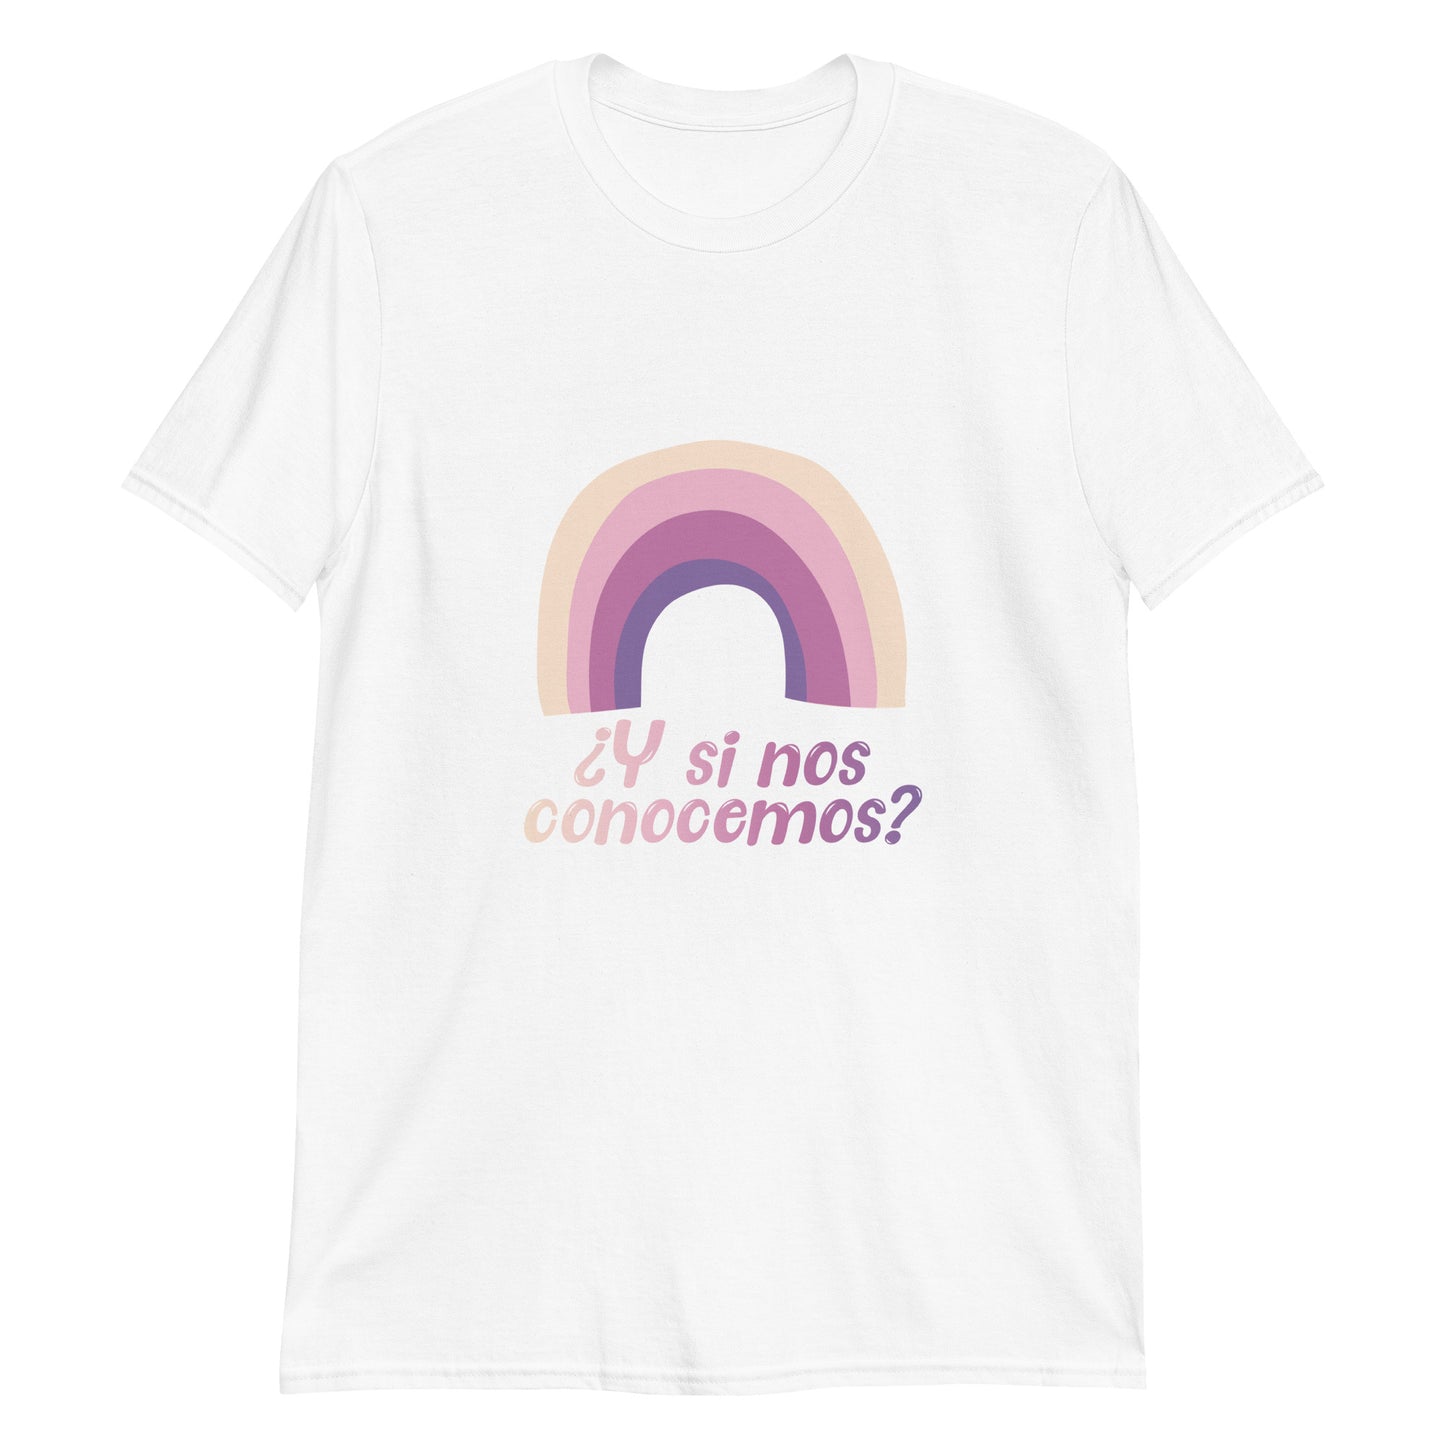 What if we meet? Anti-love T-shirt